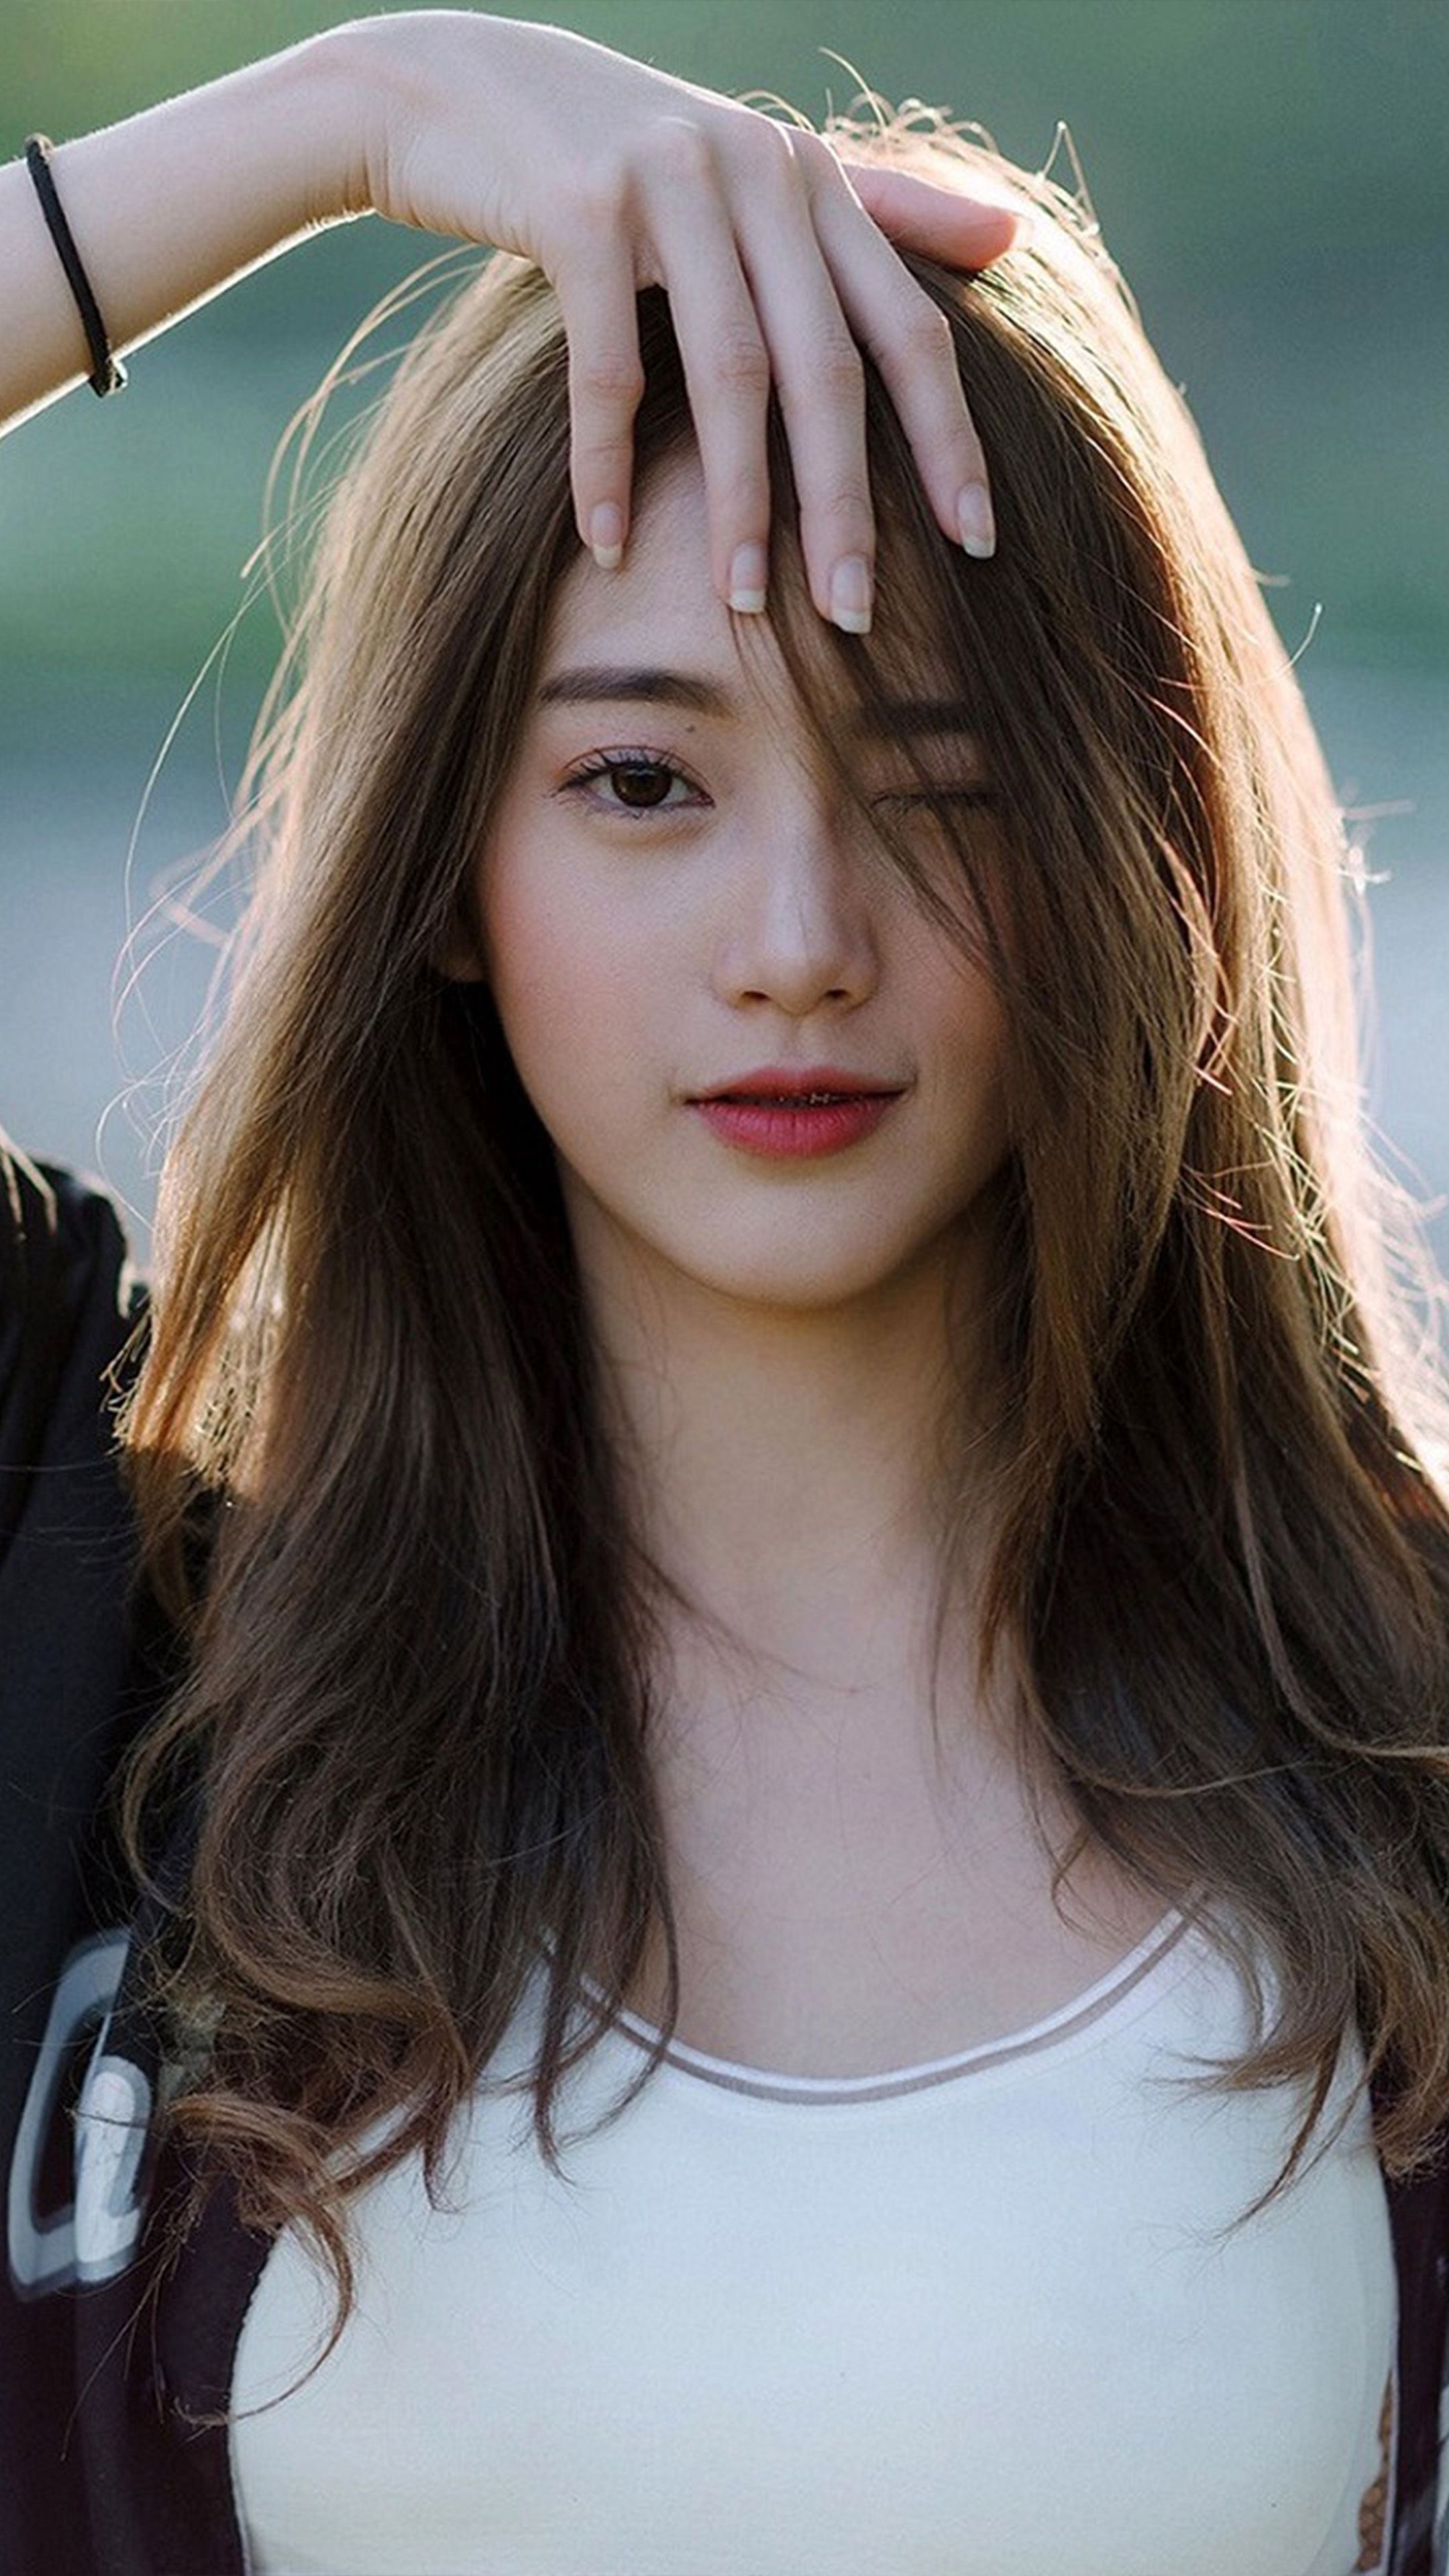 Beautiful Asian Girl